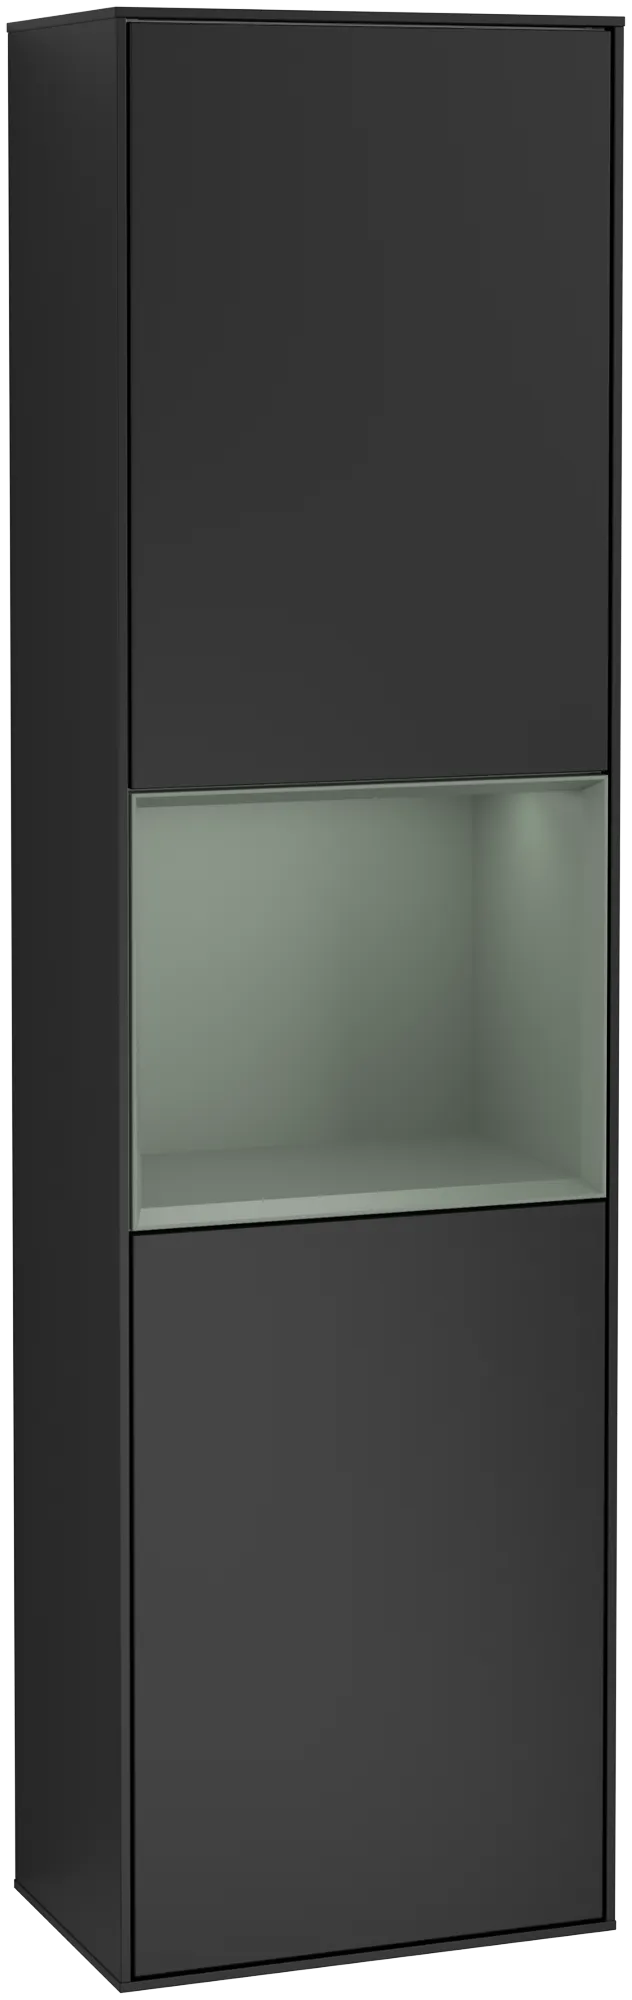 Picture of VILLEROY BOCH Finion Tall cabinet, with lighting, 2 doors, 418 x 1516 x 270 mm, Black Matt Lacquer / Olive Matt Lacquer #G460GMPD